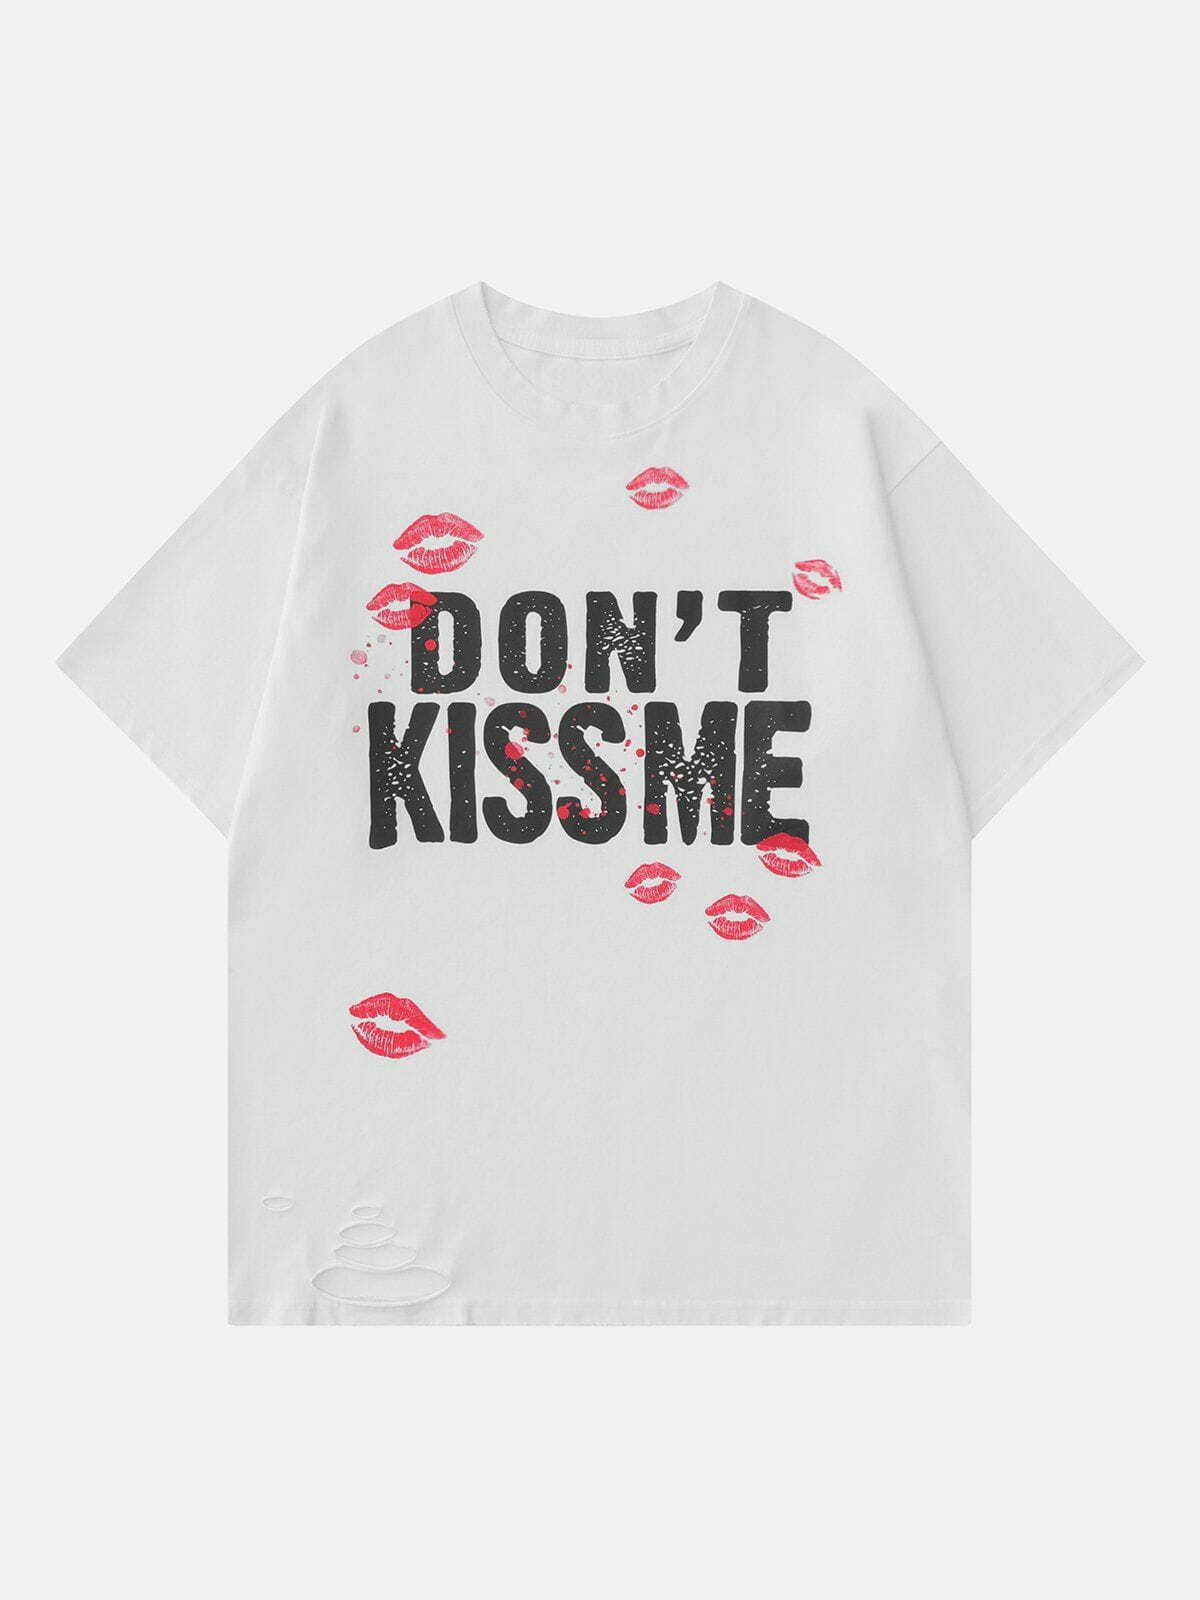 edgy kisses print tee youthful  retro streetwear essential 5588